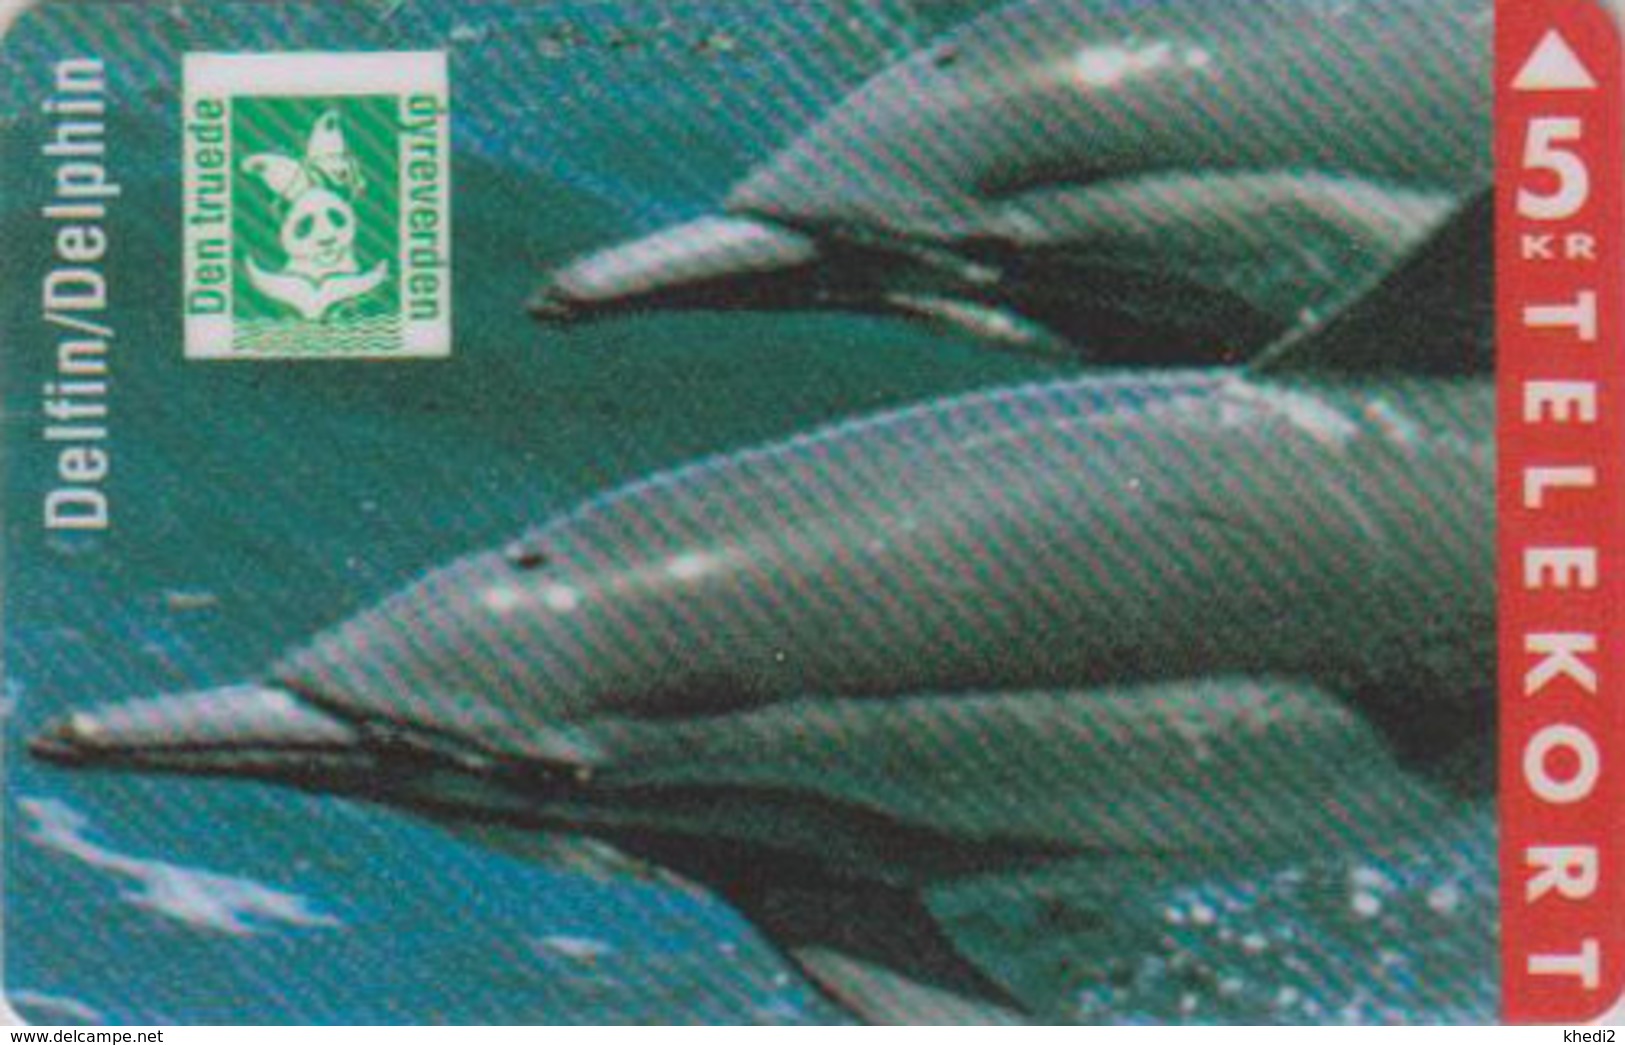 Télécarte Du Puzzle EMISSION CONJOINTE ** ENDANGERED WILDLIFE ** - Danemark - Animal - DAUPHIN - DOLPHIN - DELFIN - Dolphins